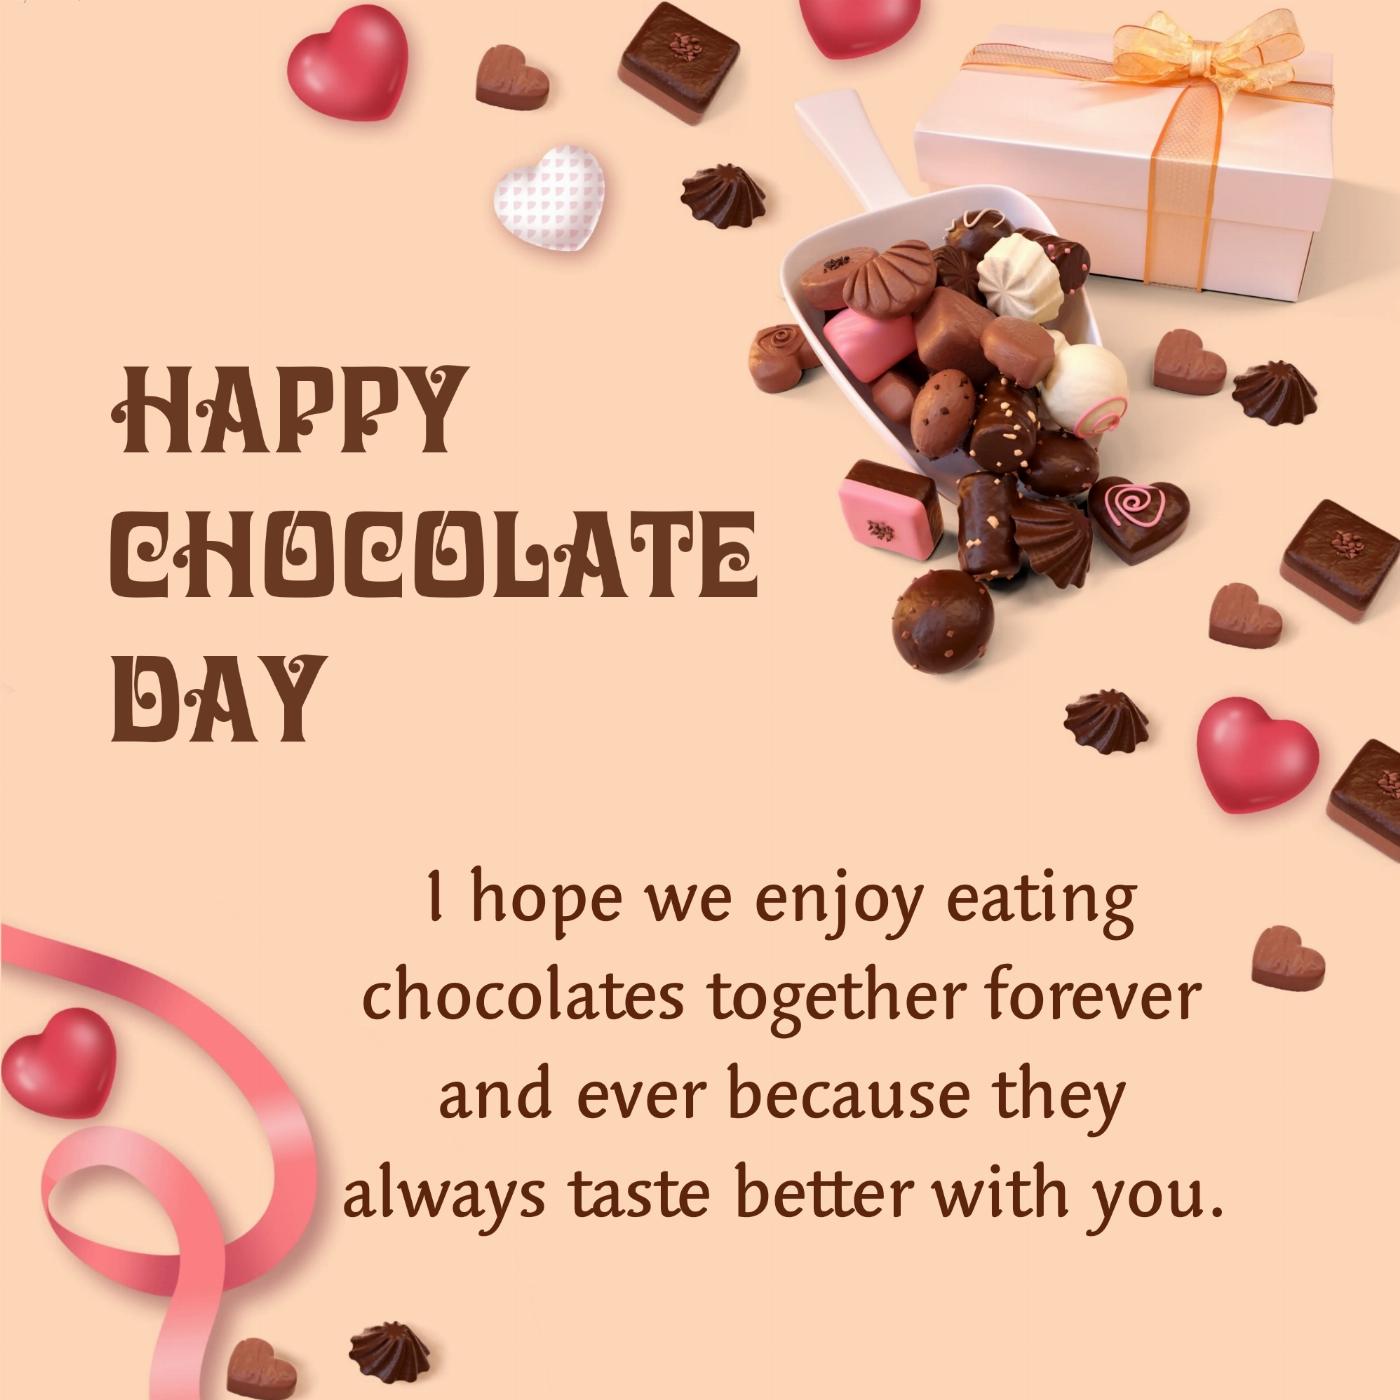 I hope we enjoy eating chocolates together forever